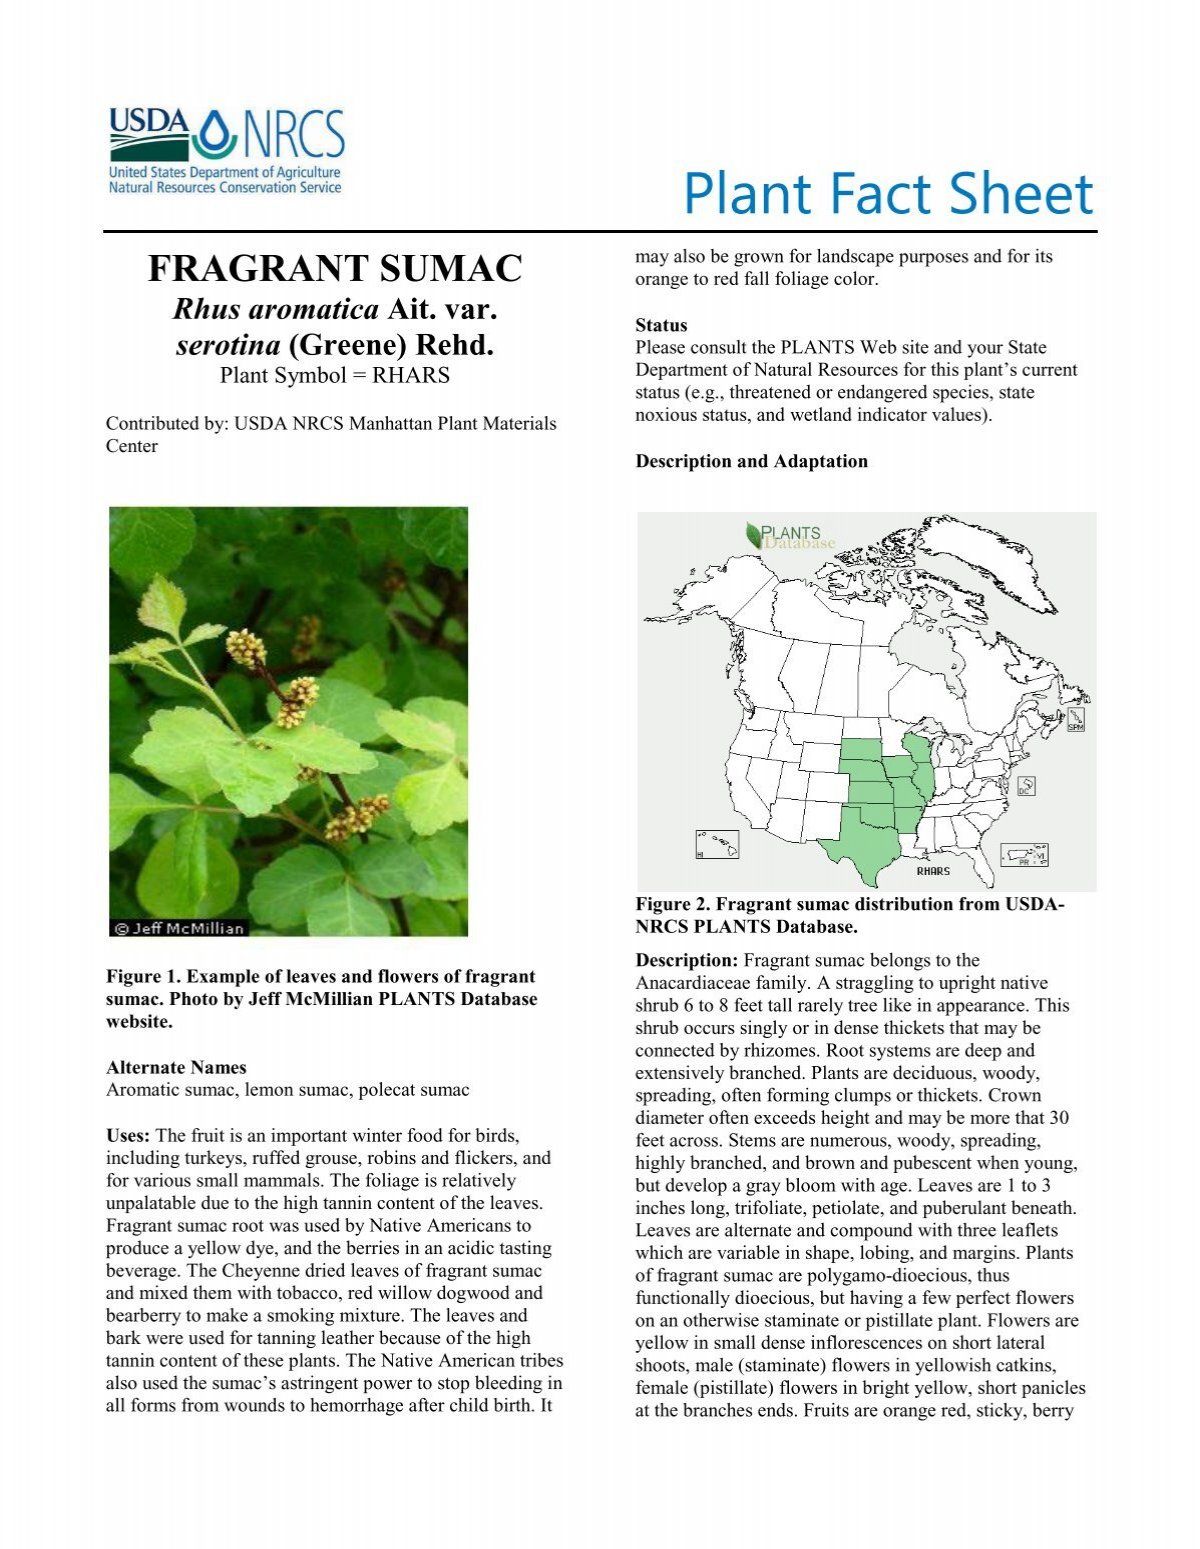 rhus-aromatica-plant-fact-sheet-usda-plants-database